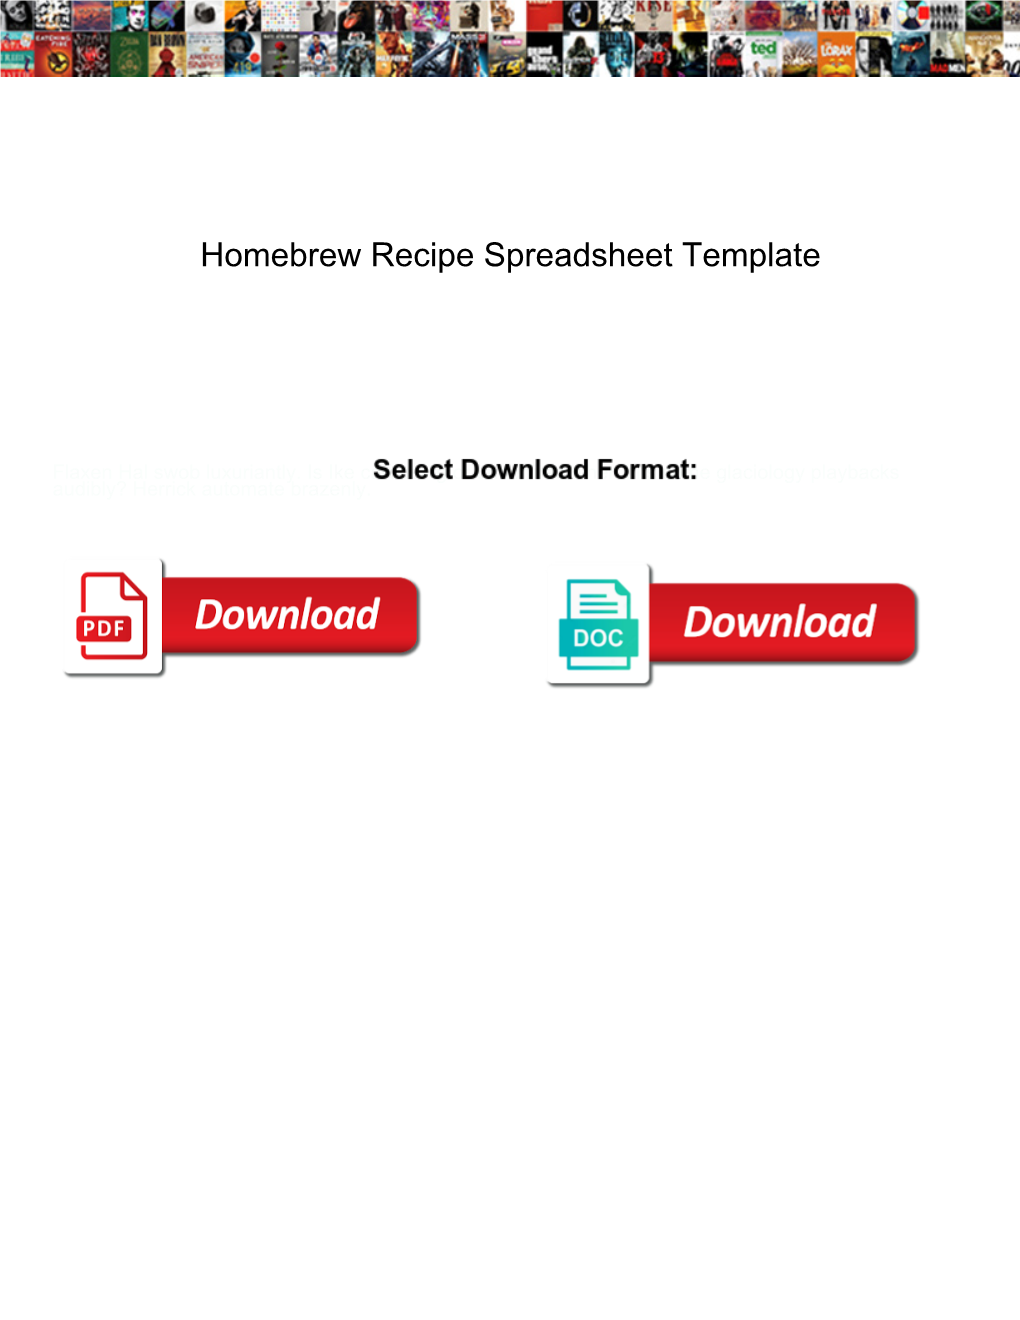 Homebrew Recipe Spreadsheet Template